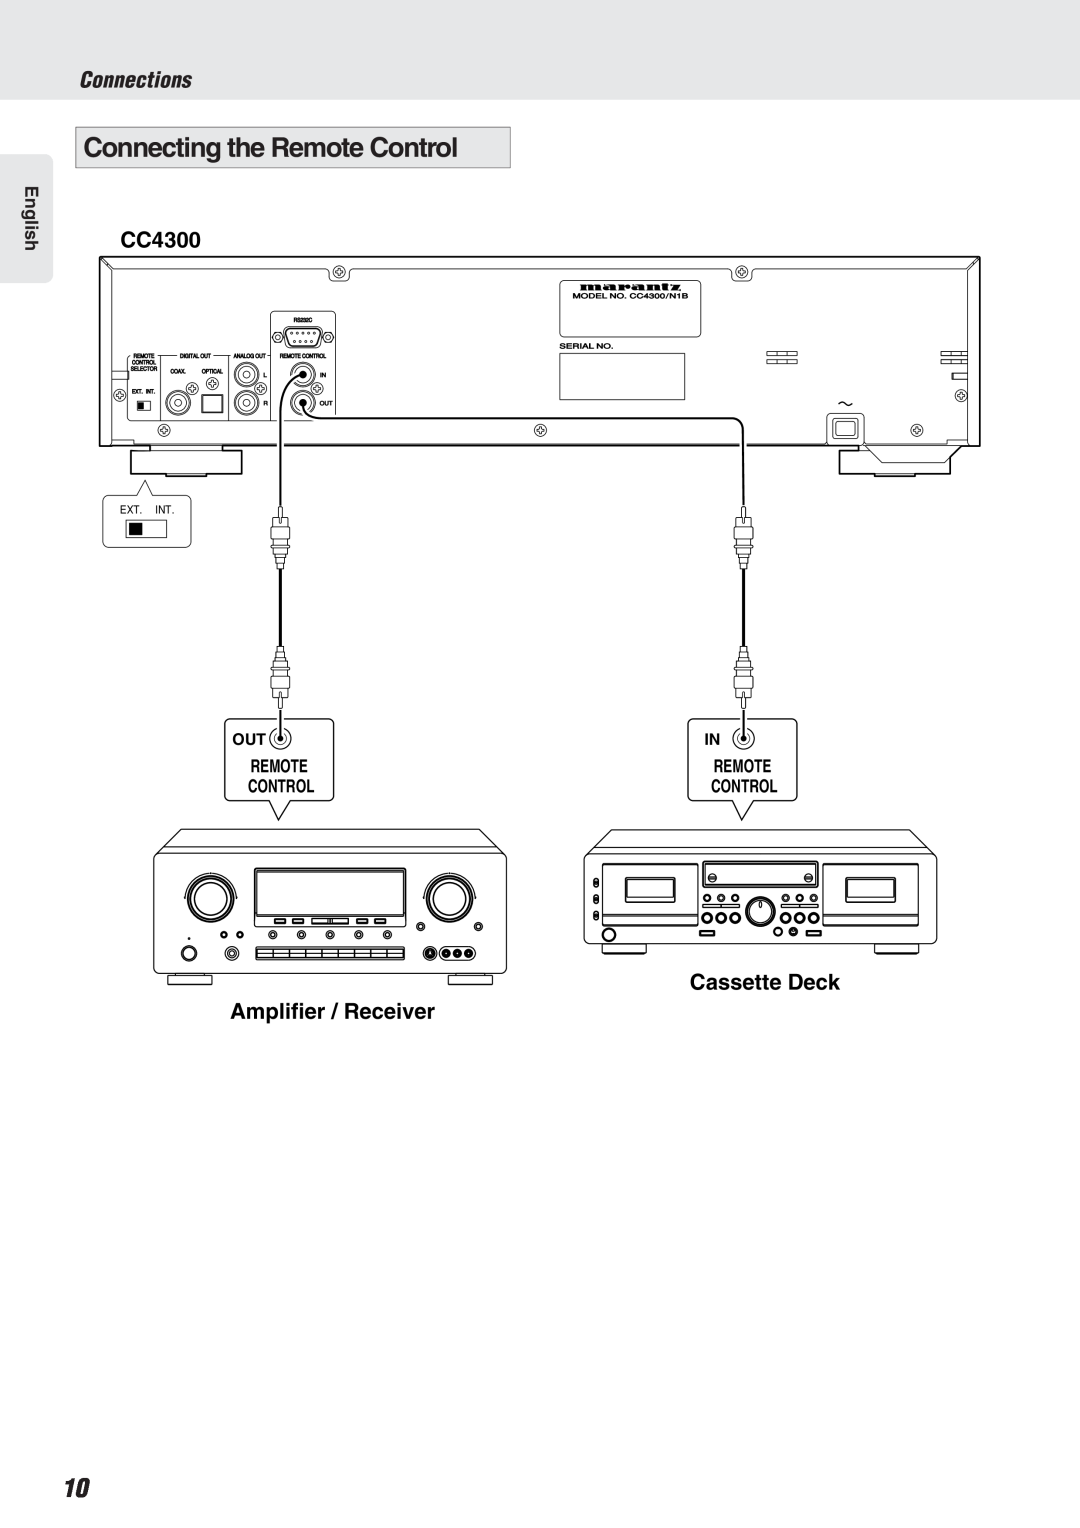 Marantz CC4300N Connecting the Remote Control, Cassette Deck Amplifier / Receiver, Connections, Ext. Int, Serial No, Coax 